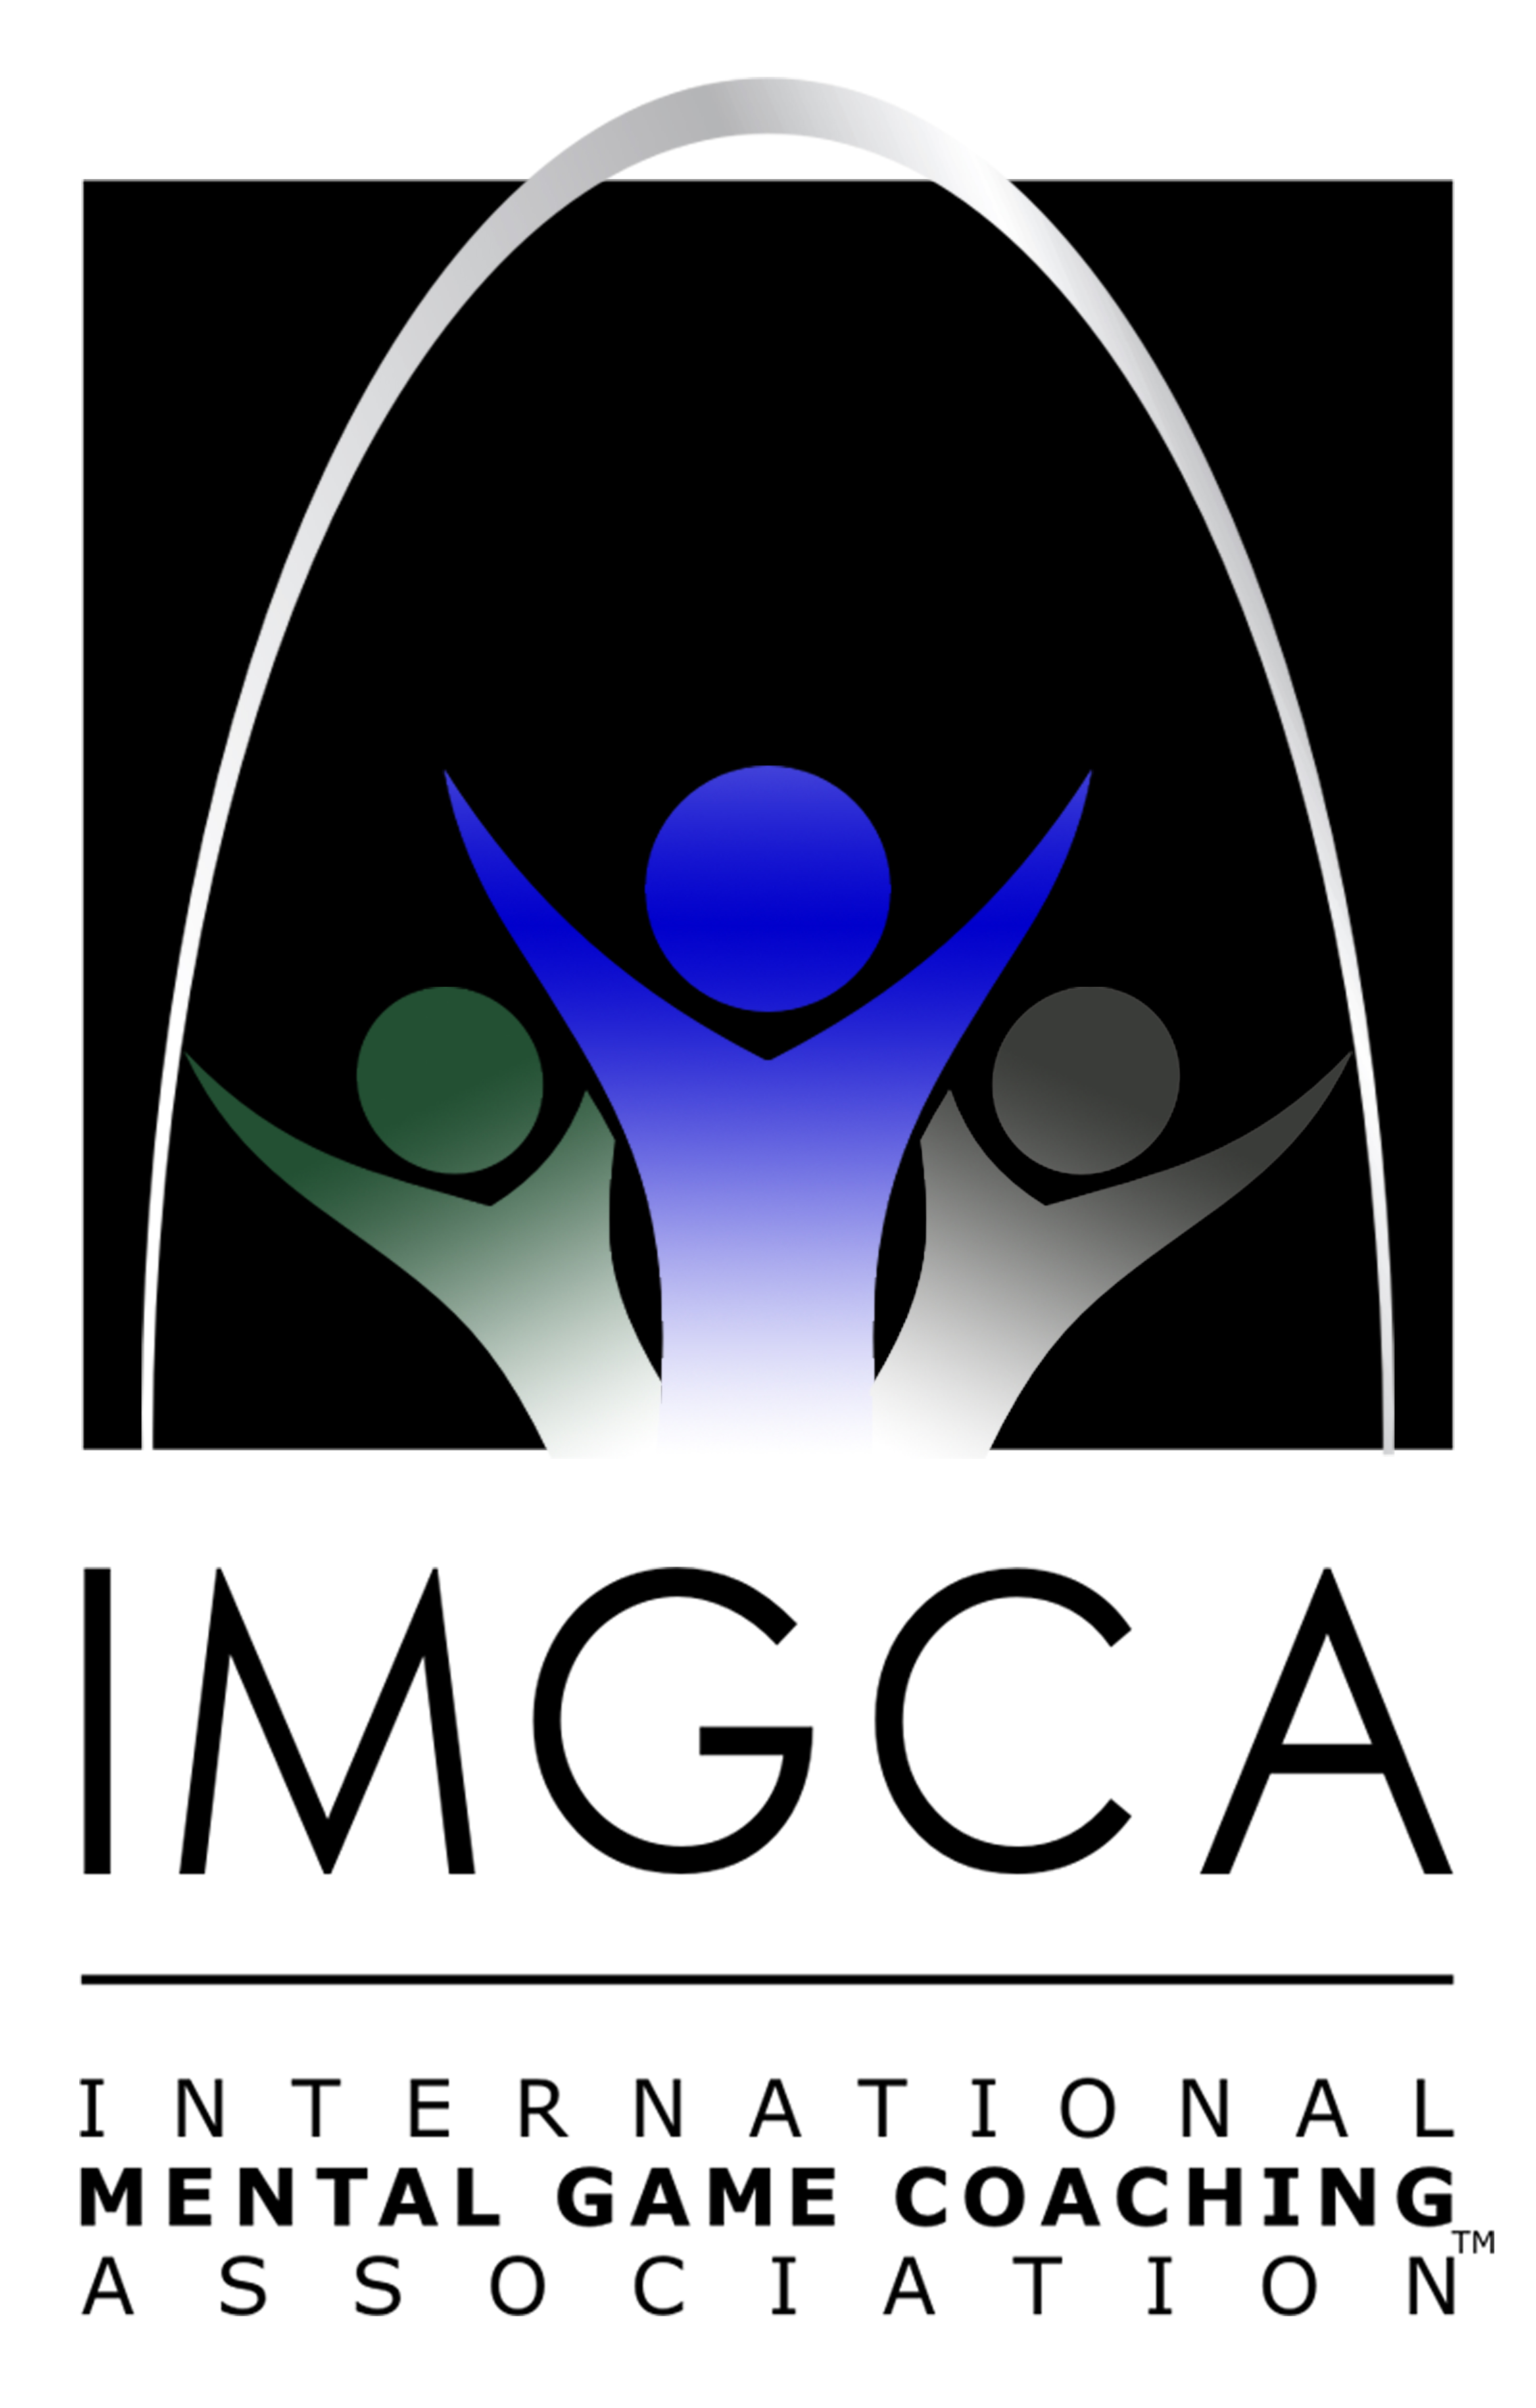 Very large IMGCA logo